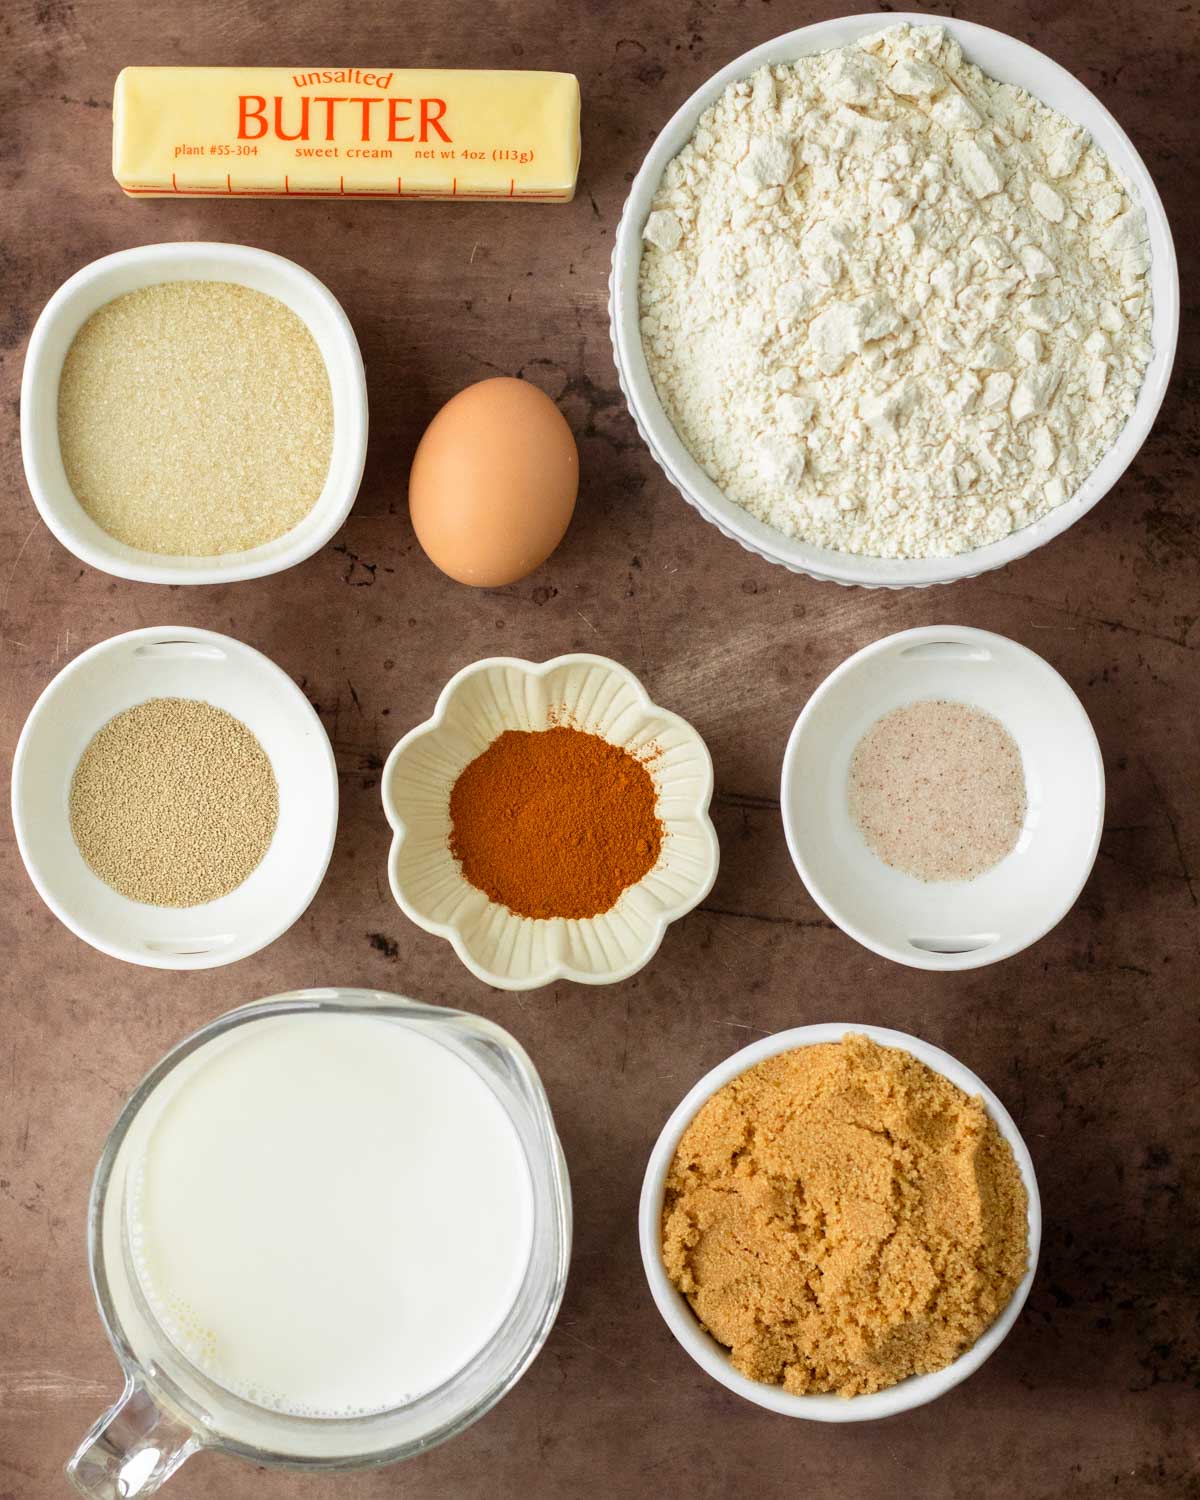 Ingredients for Cinnamon Rolls